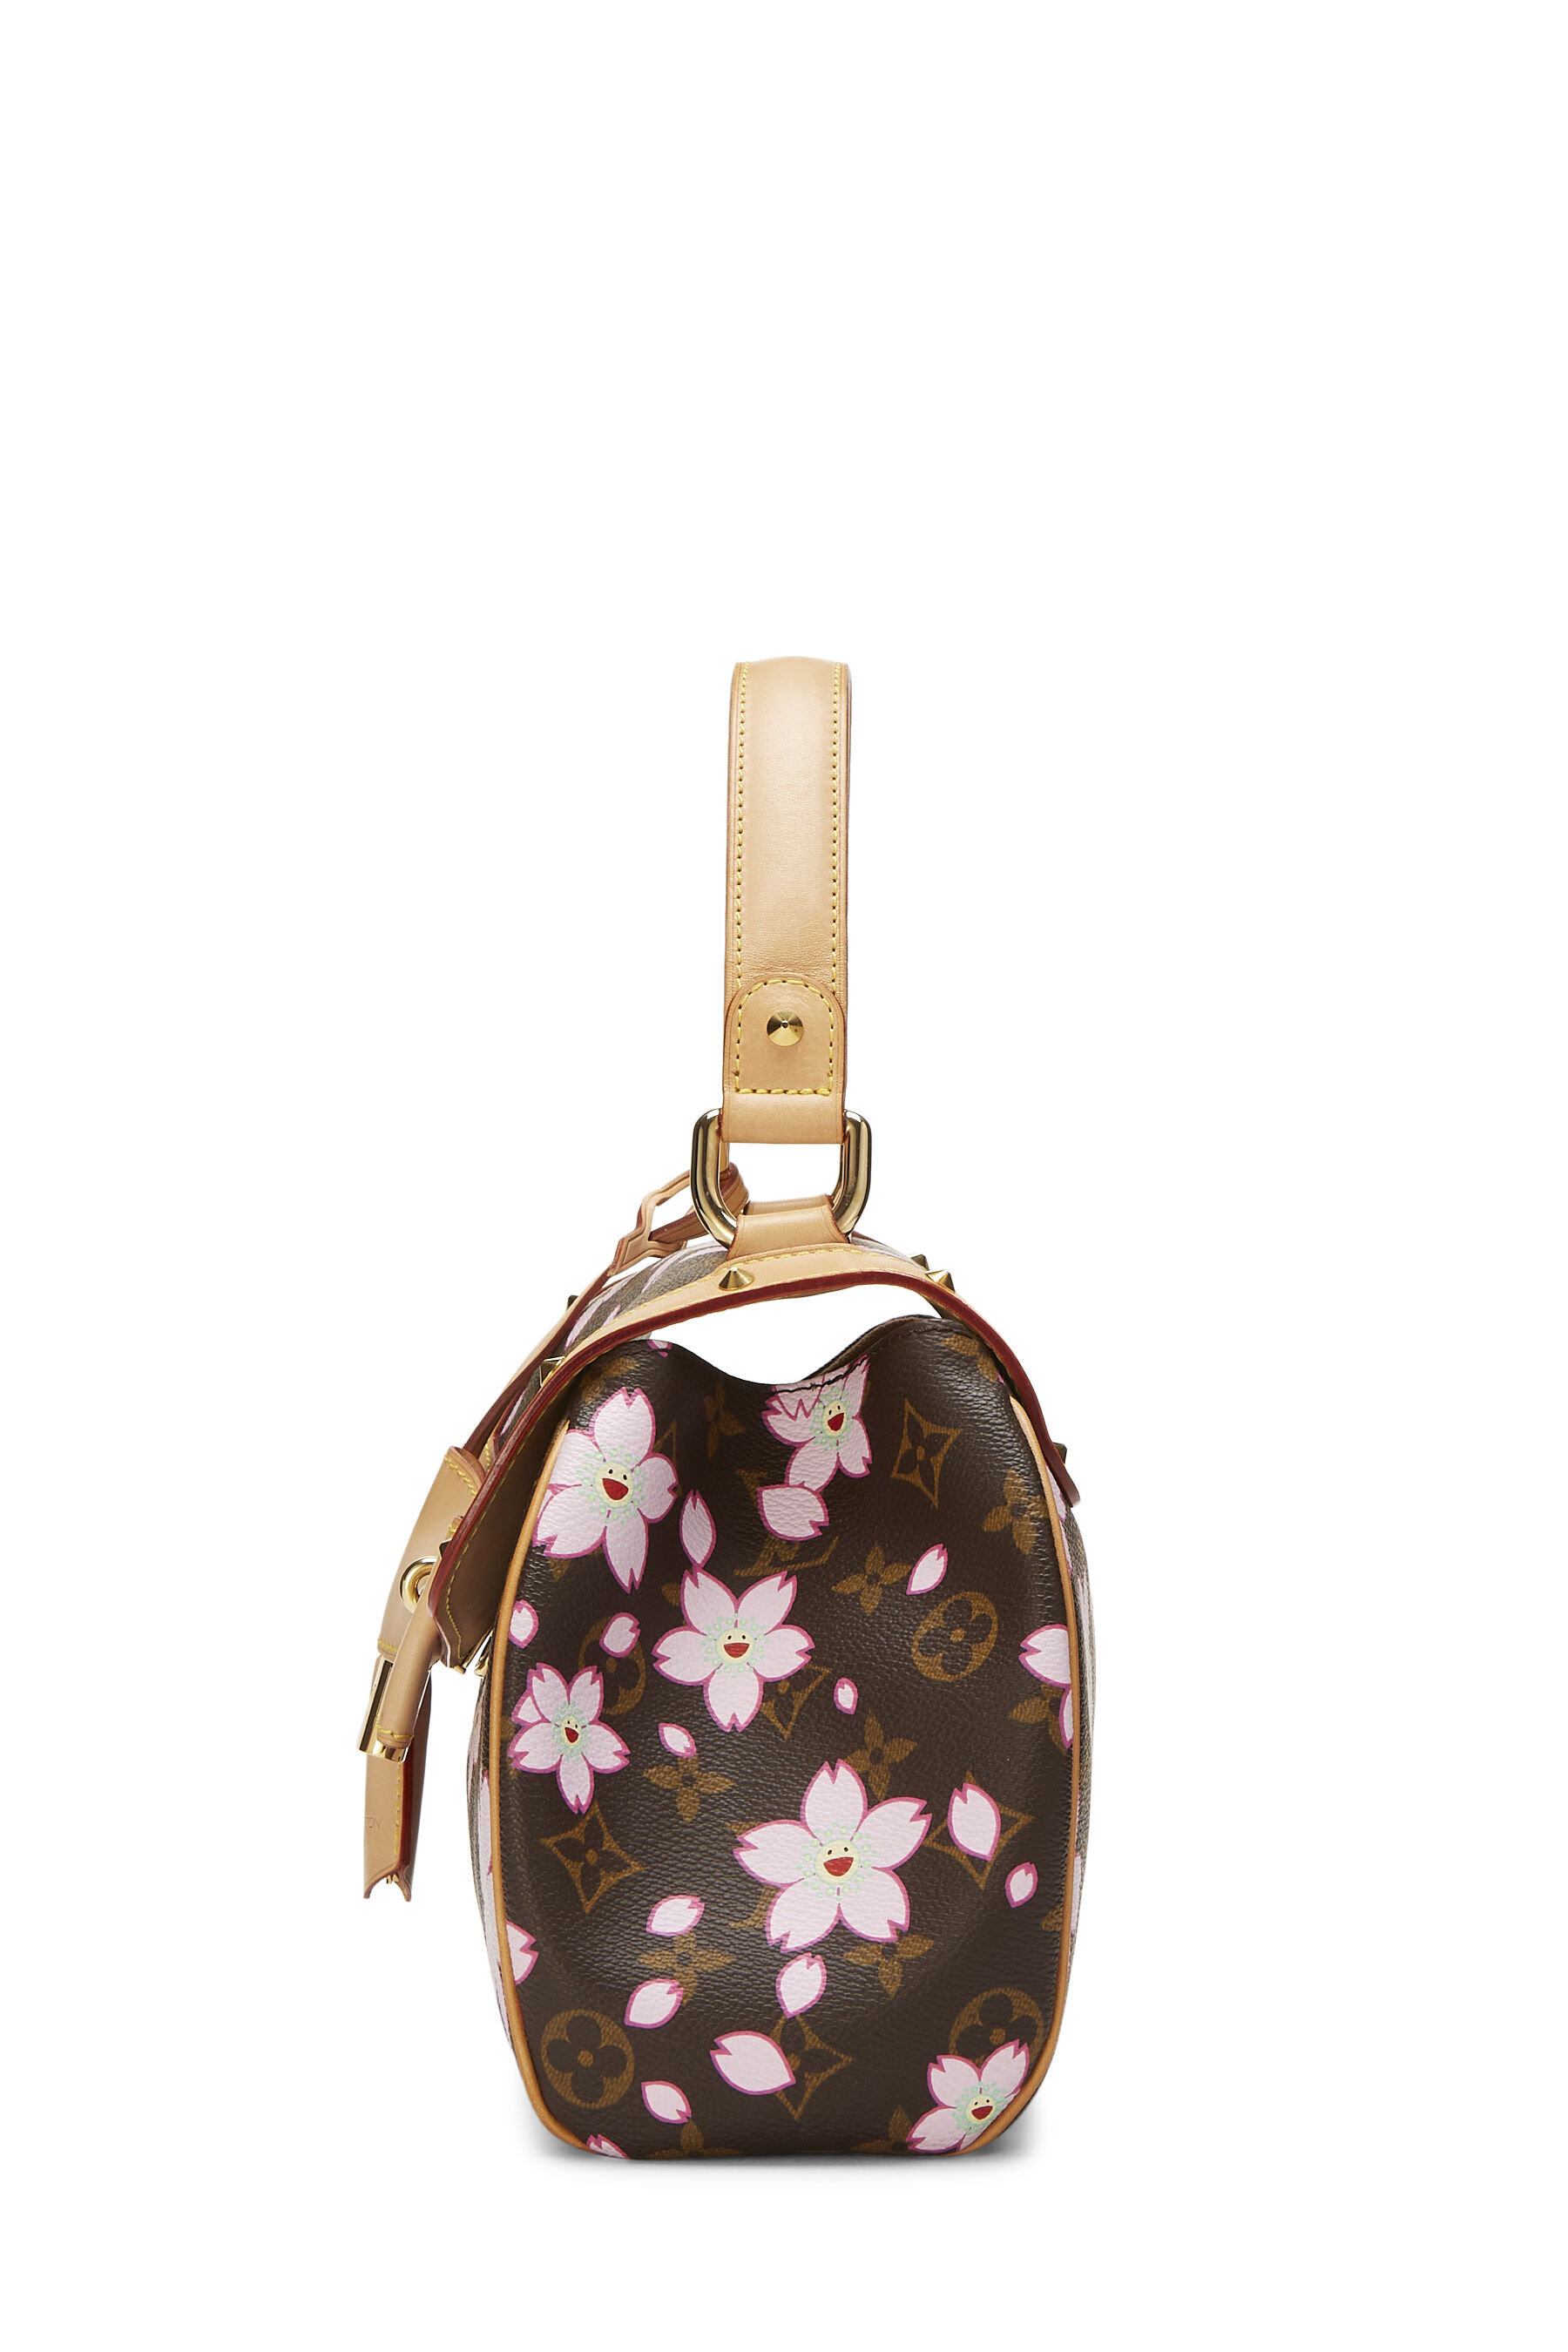 LOUIS VUITTON x Takashi Murakami Pochette Clé Coin Purse Cherry Blossom |  eBay